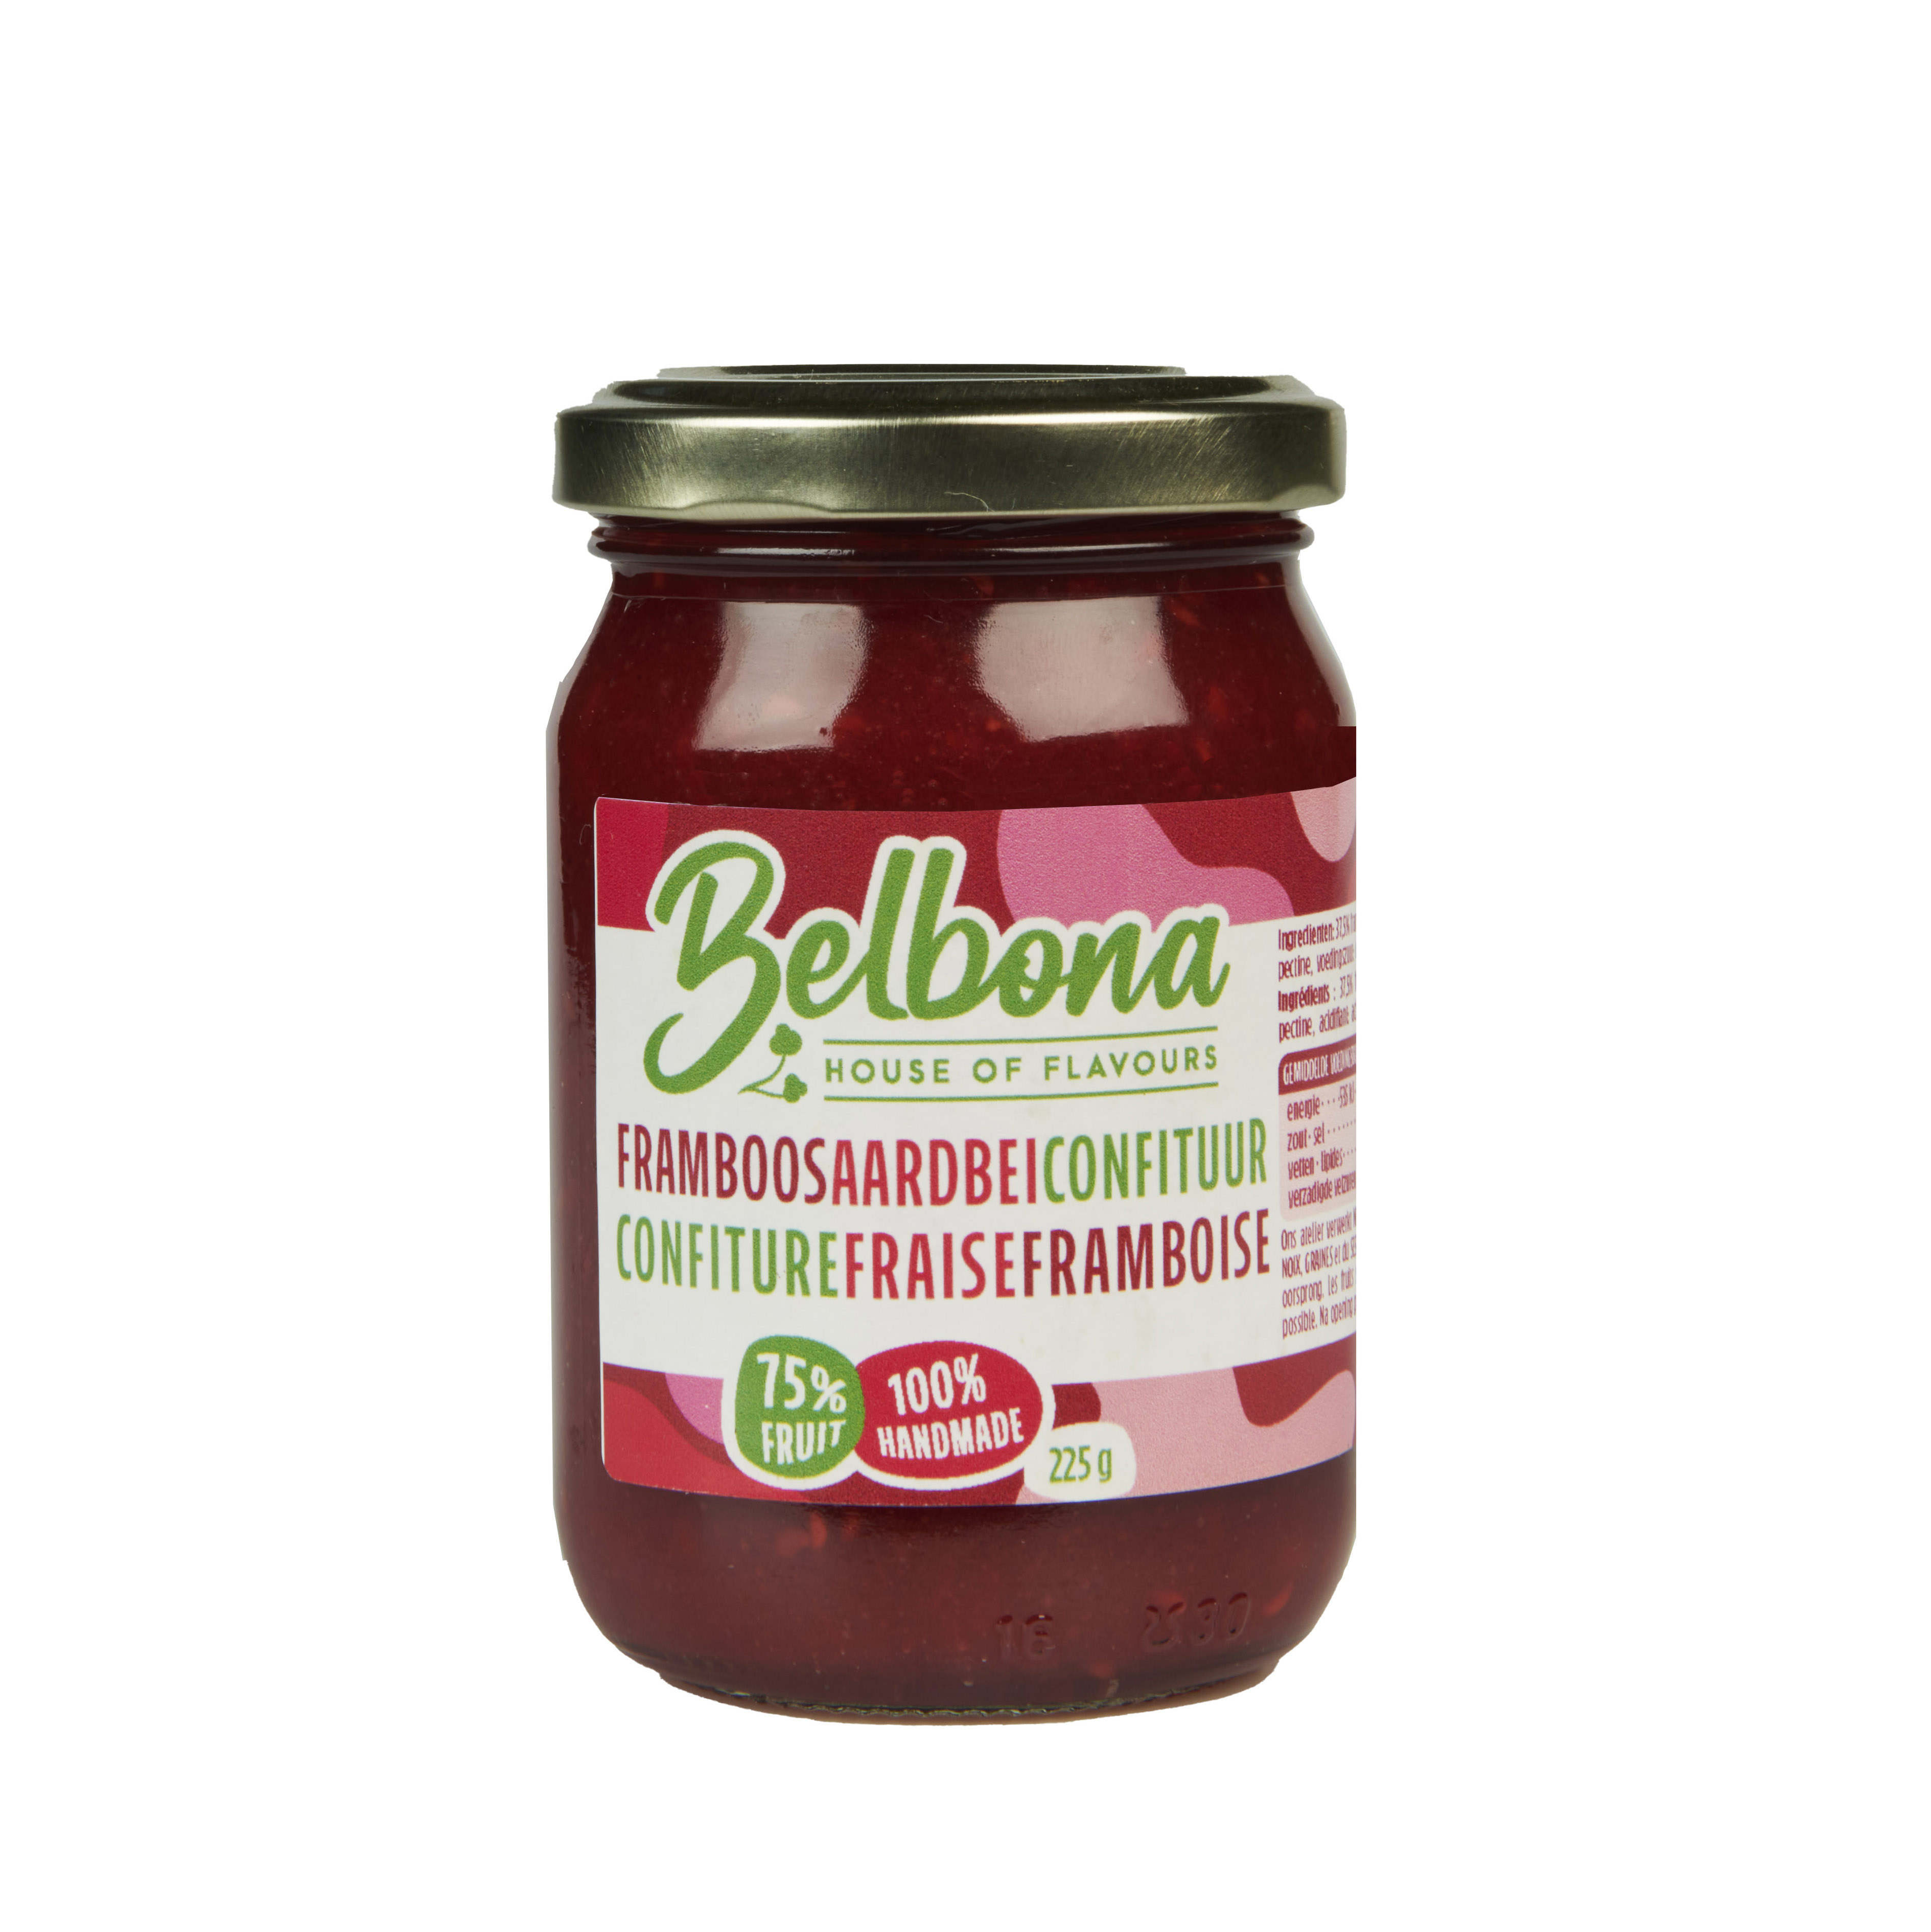 324100-Saltimbocca-papardelle-tomate